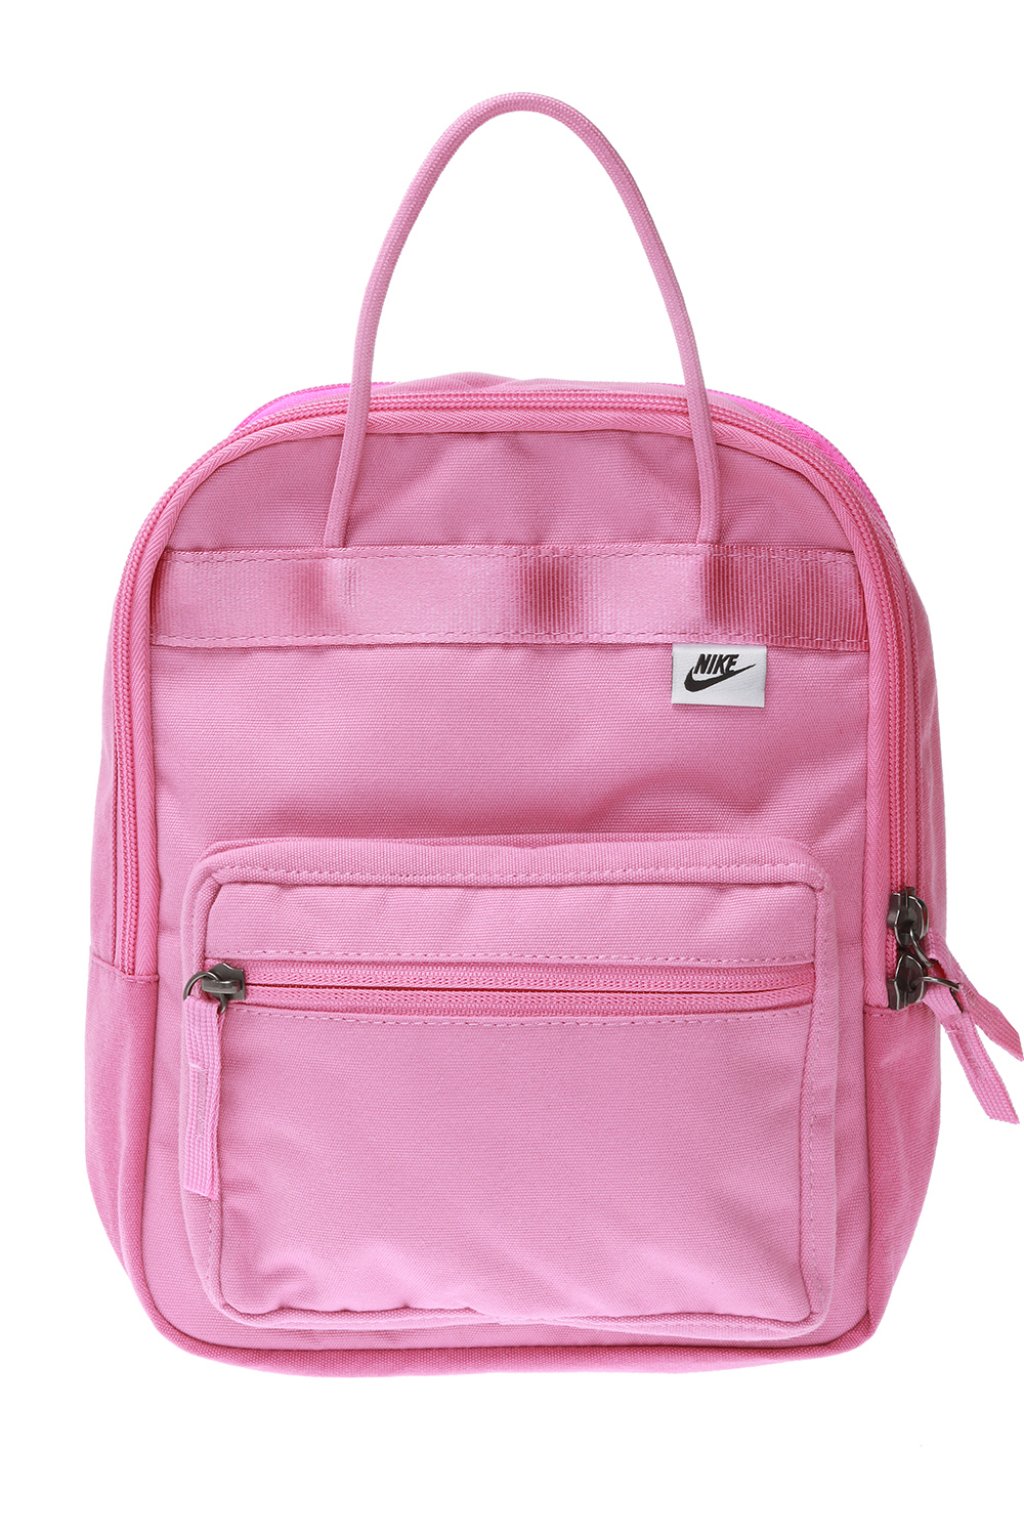 Tanjun' backpack with logo Nike 